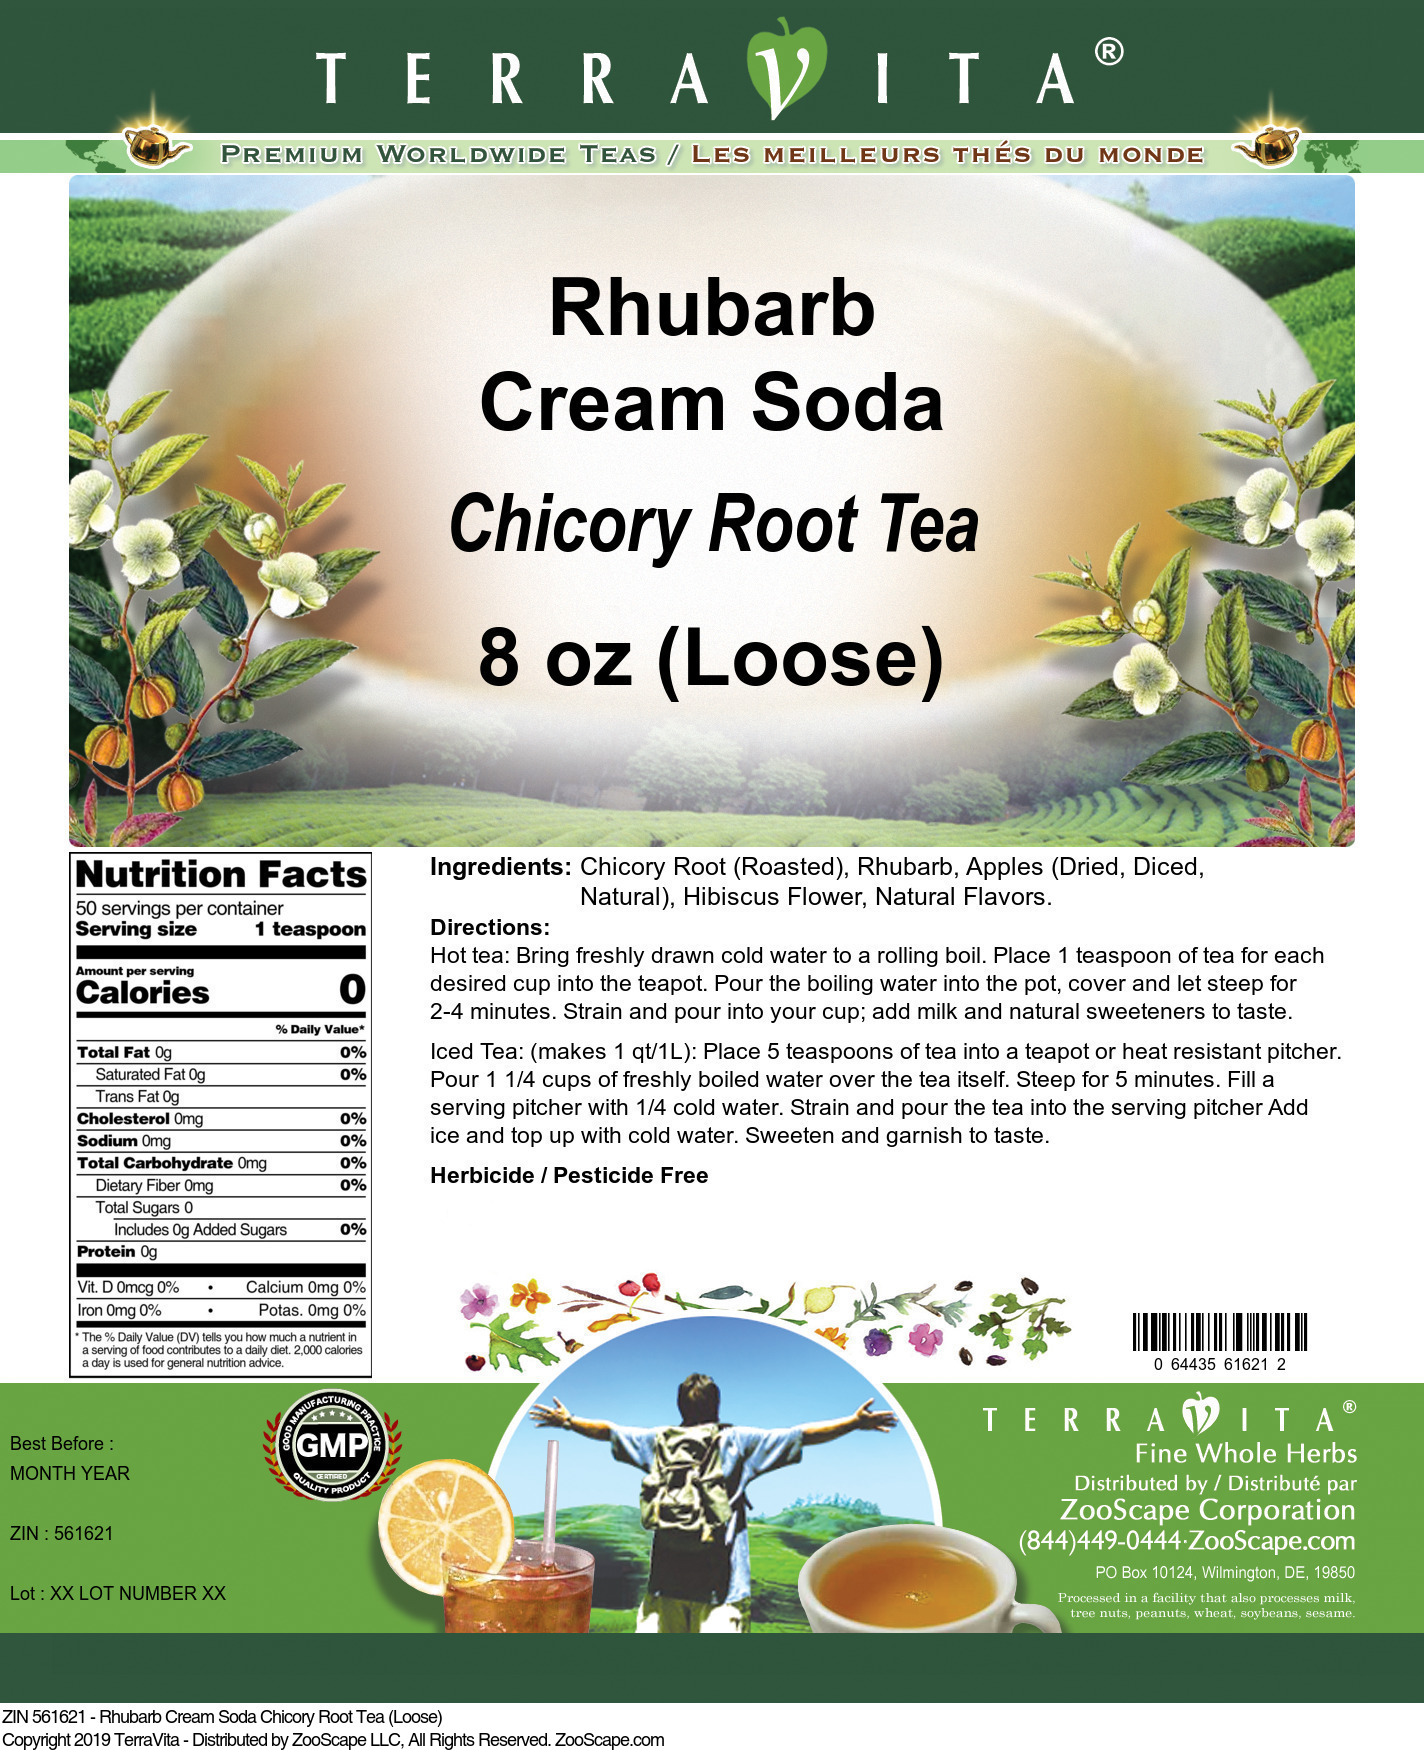 Rhubarb Cream Soda Chicory Root Tea (Loose) - Label